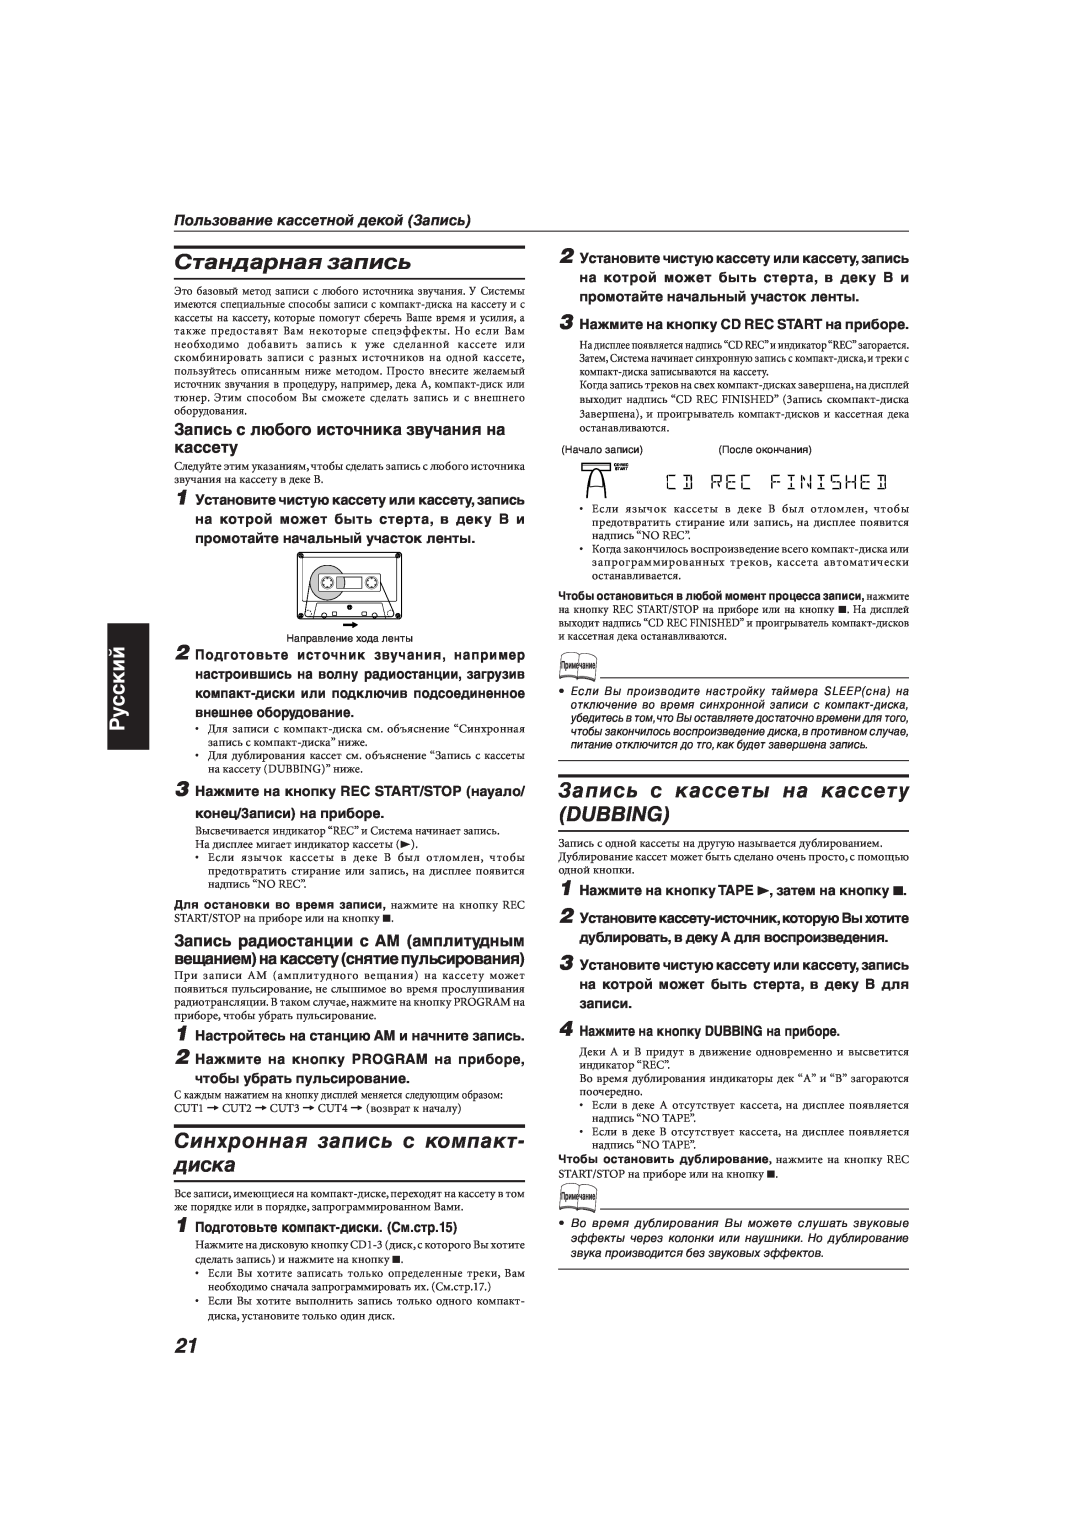 JVC MX-KA66 manual Стандарная запись, Синхронная запись с компакт- диска, Запись с кассеты на кассету DUBBING, Русский 